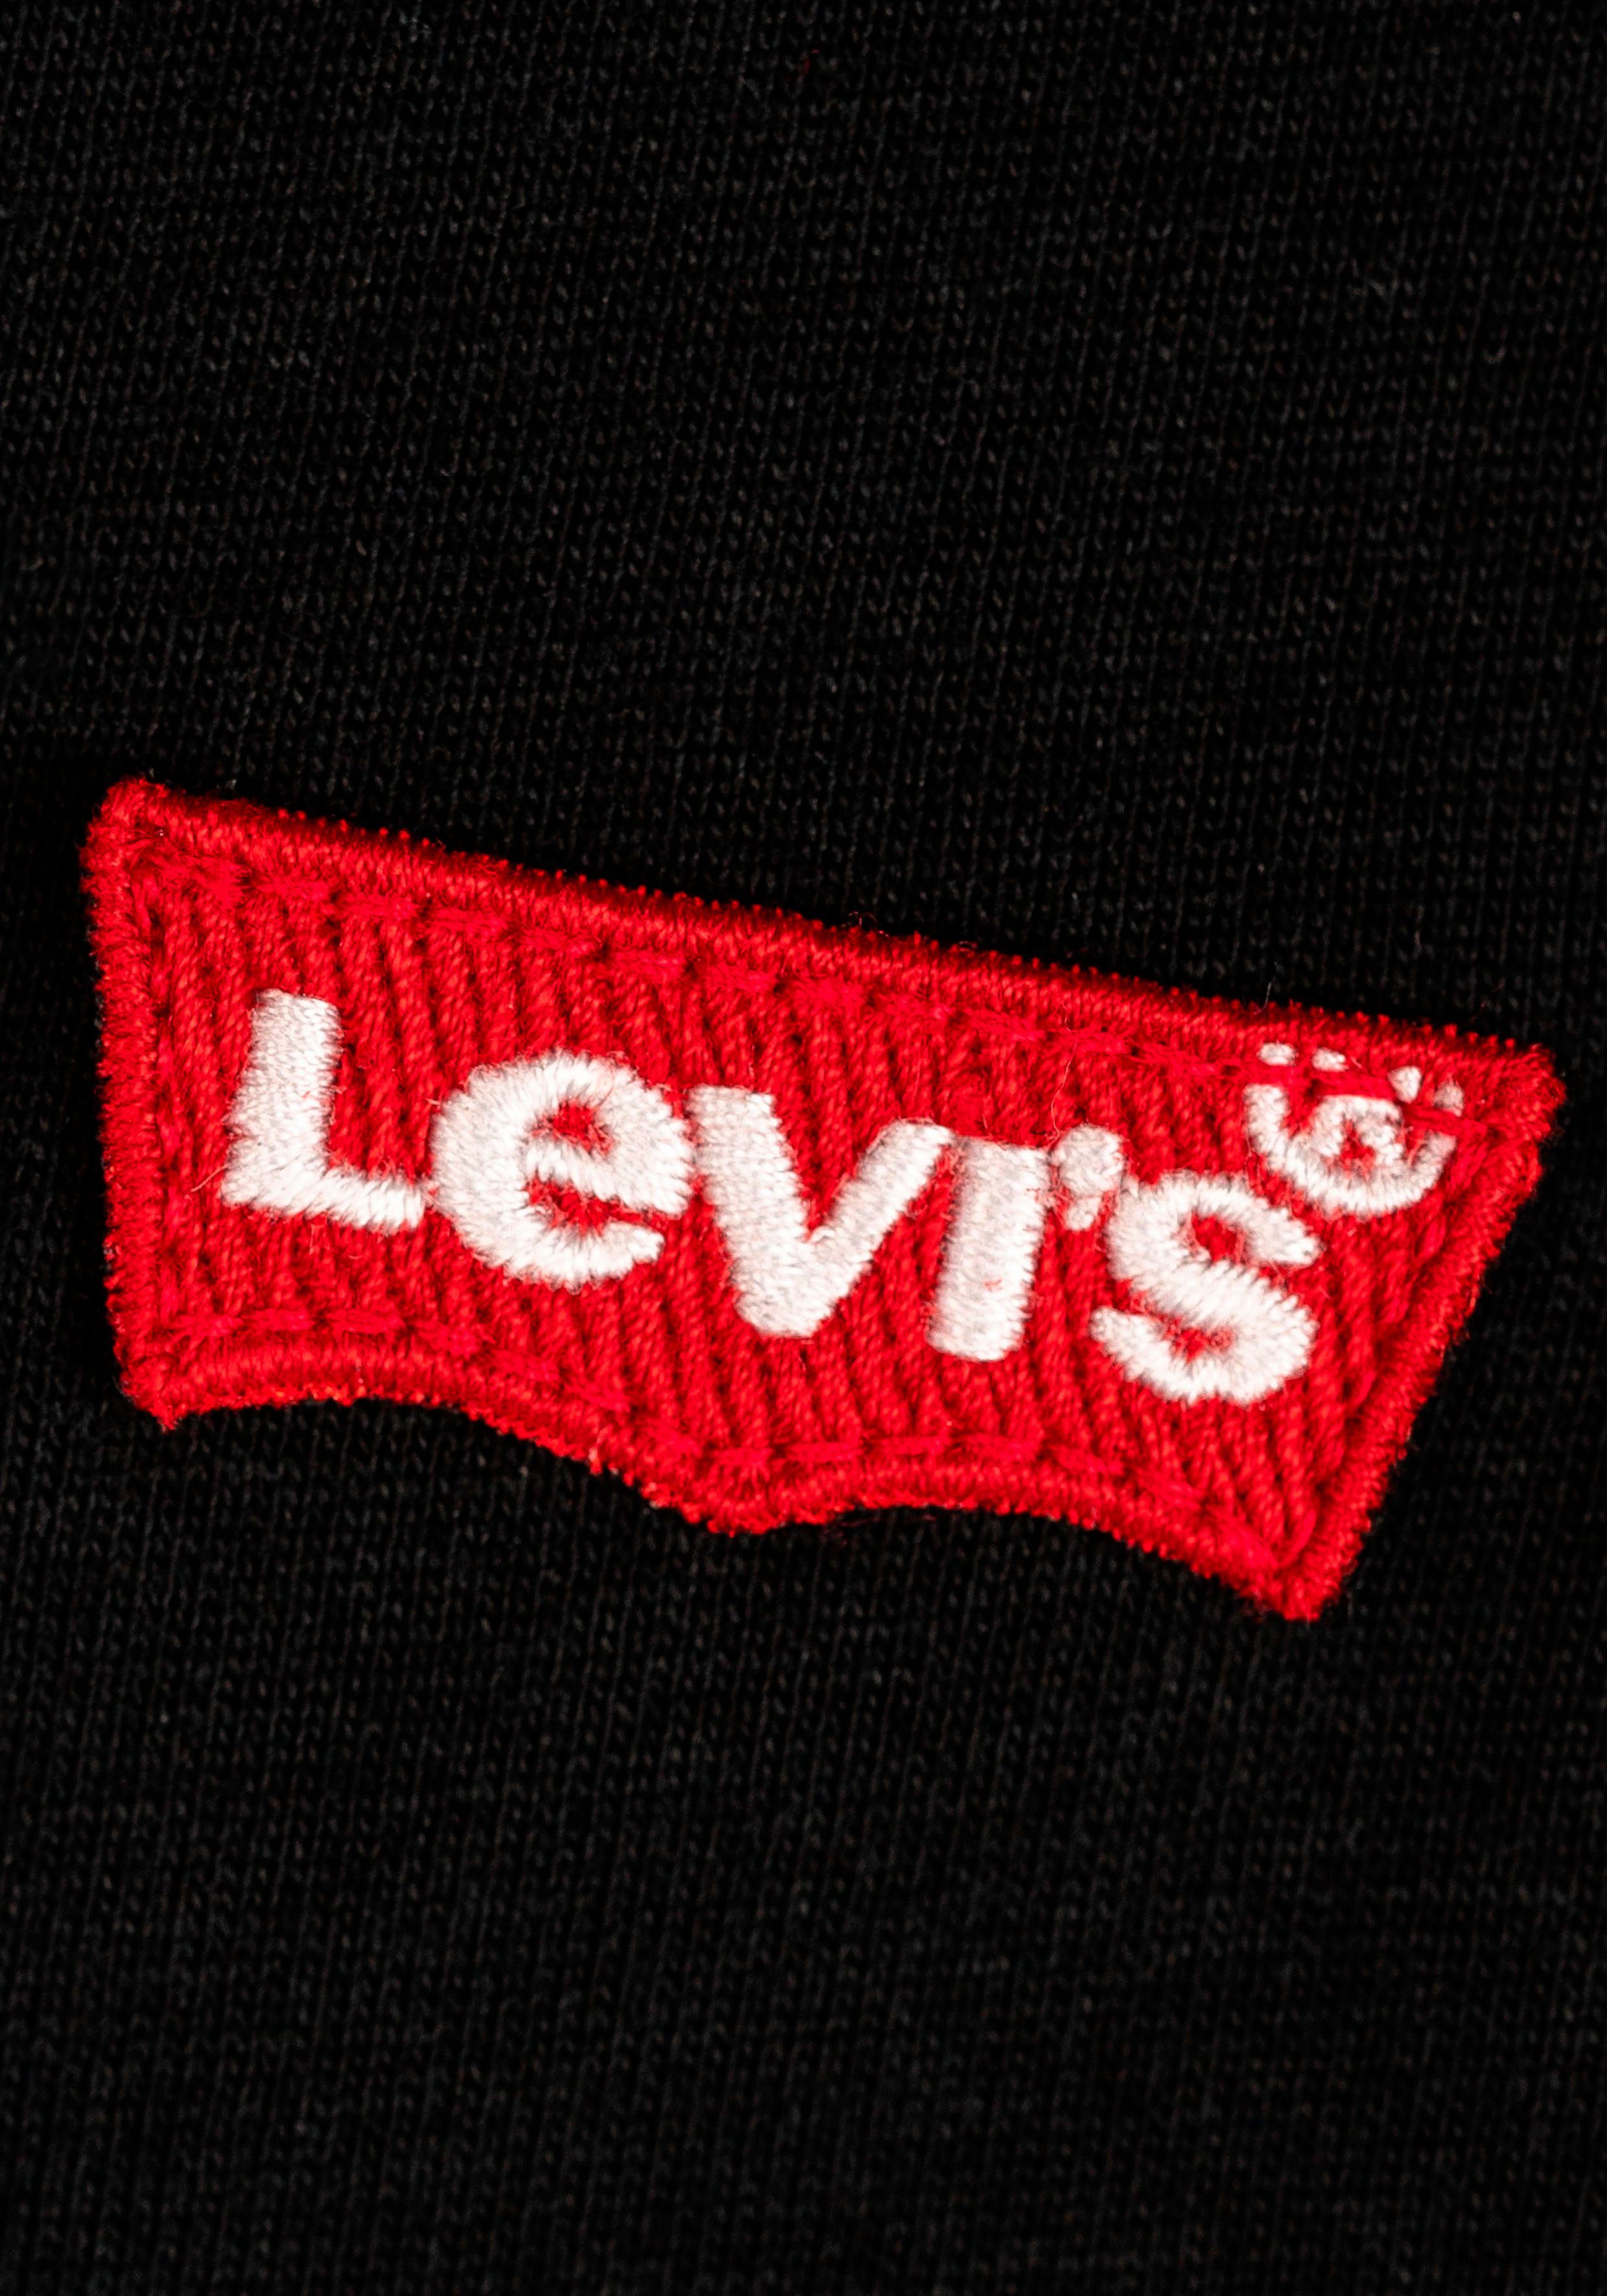 Kids black CHEST for Levi's® HIT BATWING T-Shirt BOYS